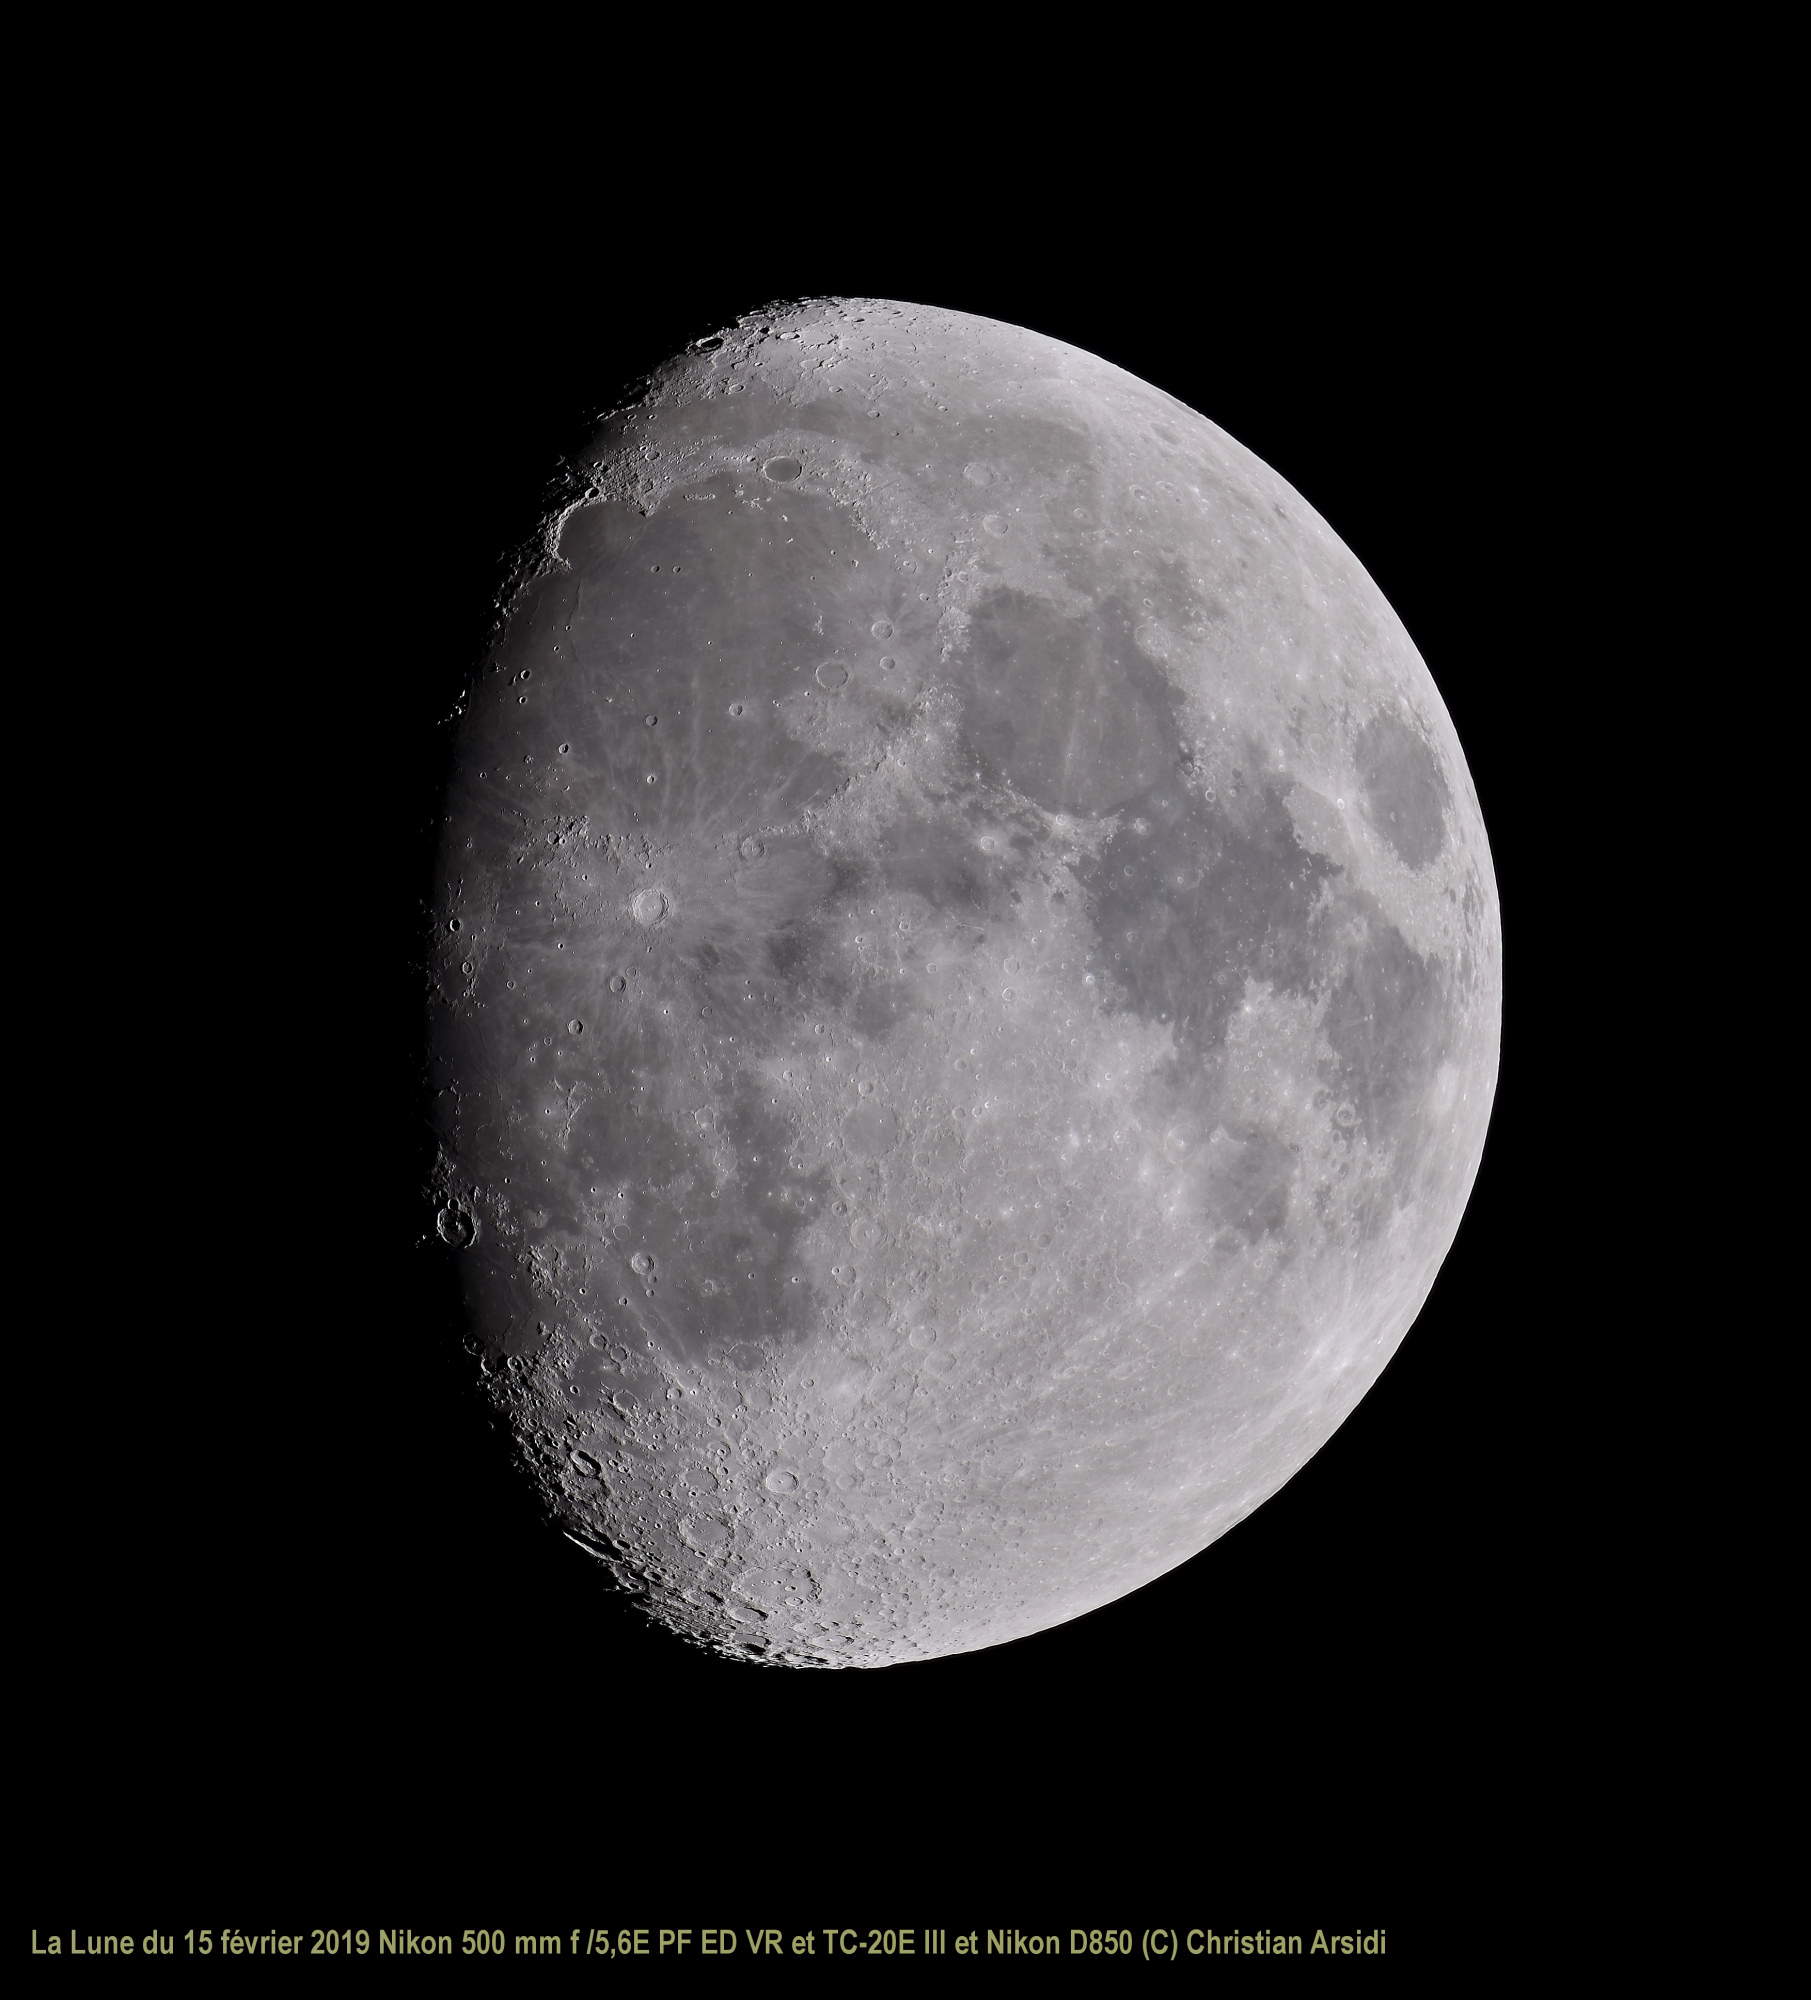 La Lune 30 images Vancittert et MF recadrée BV_DxO JPEG.jpg